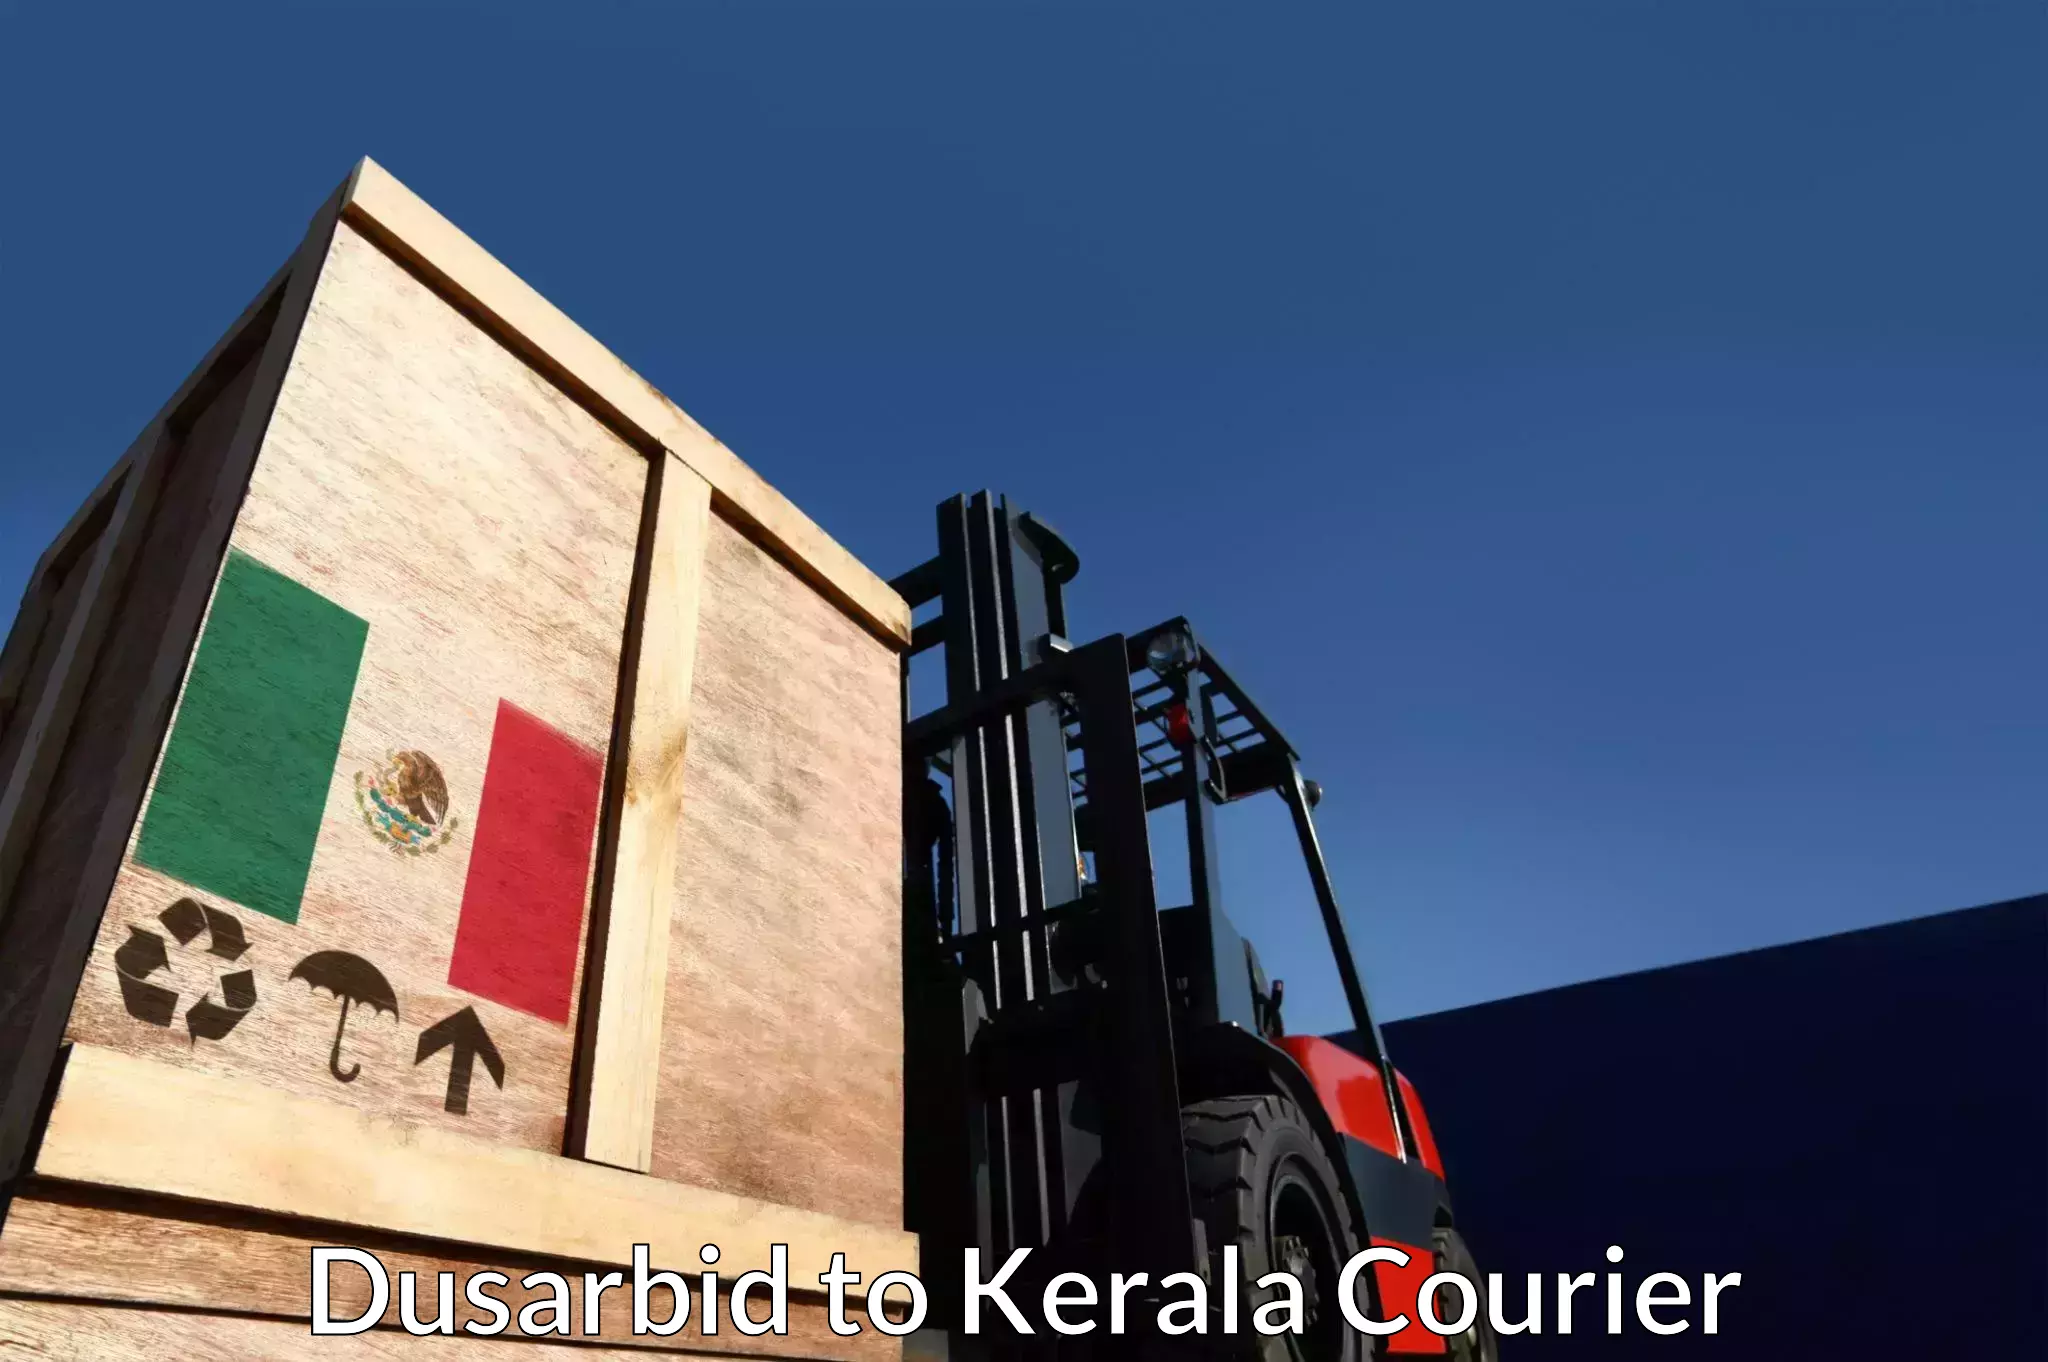 Global logistics network Dusarbid to Kanjirapally